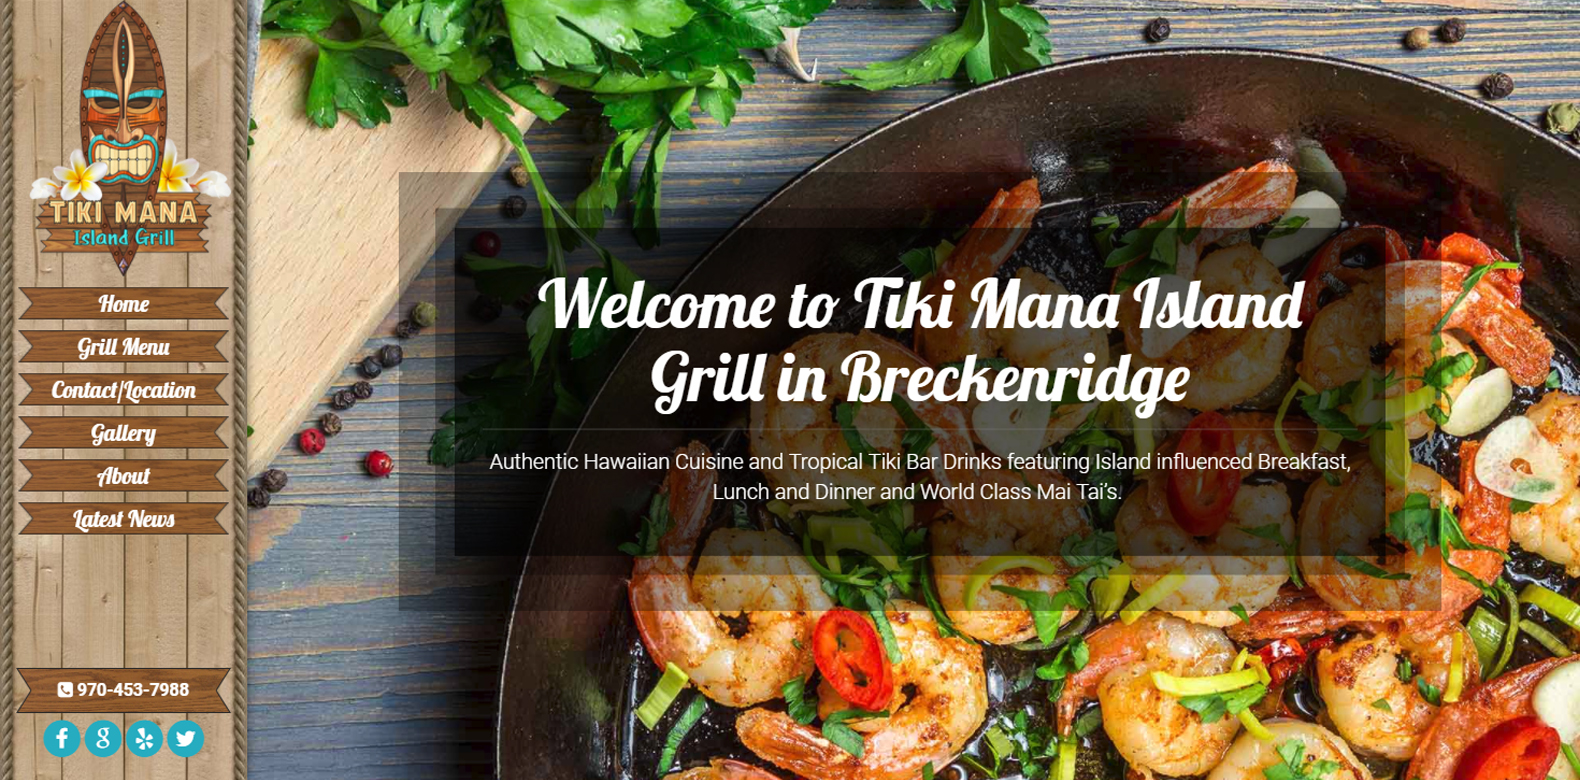 
New Website Launch: Tiki Mana Island Grill